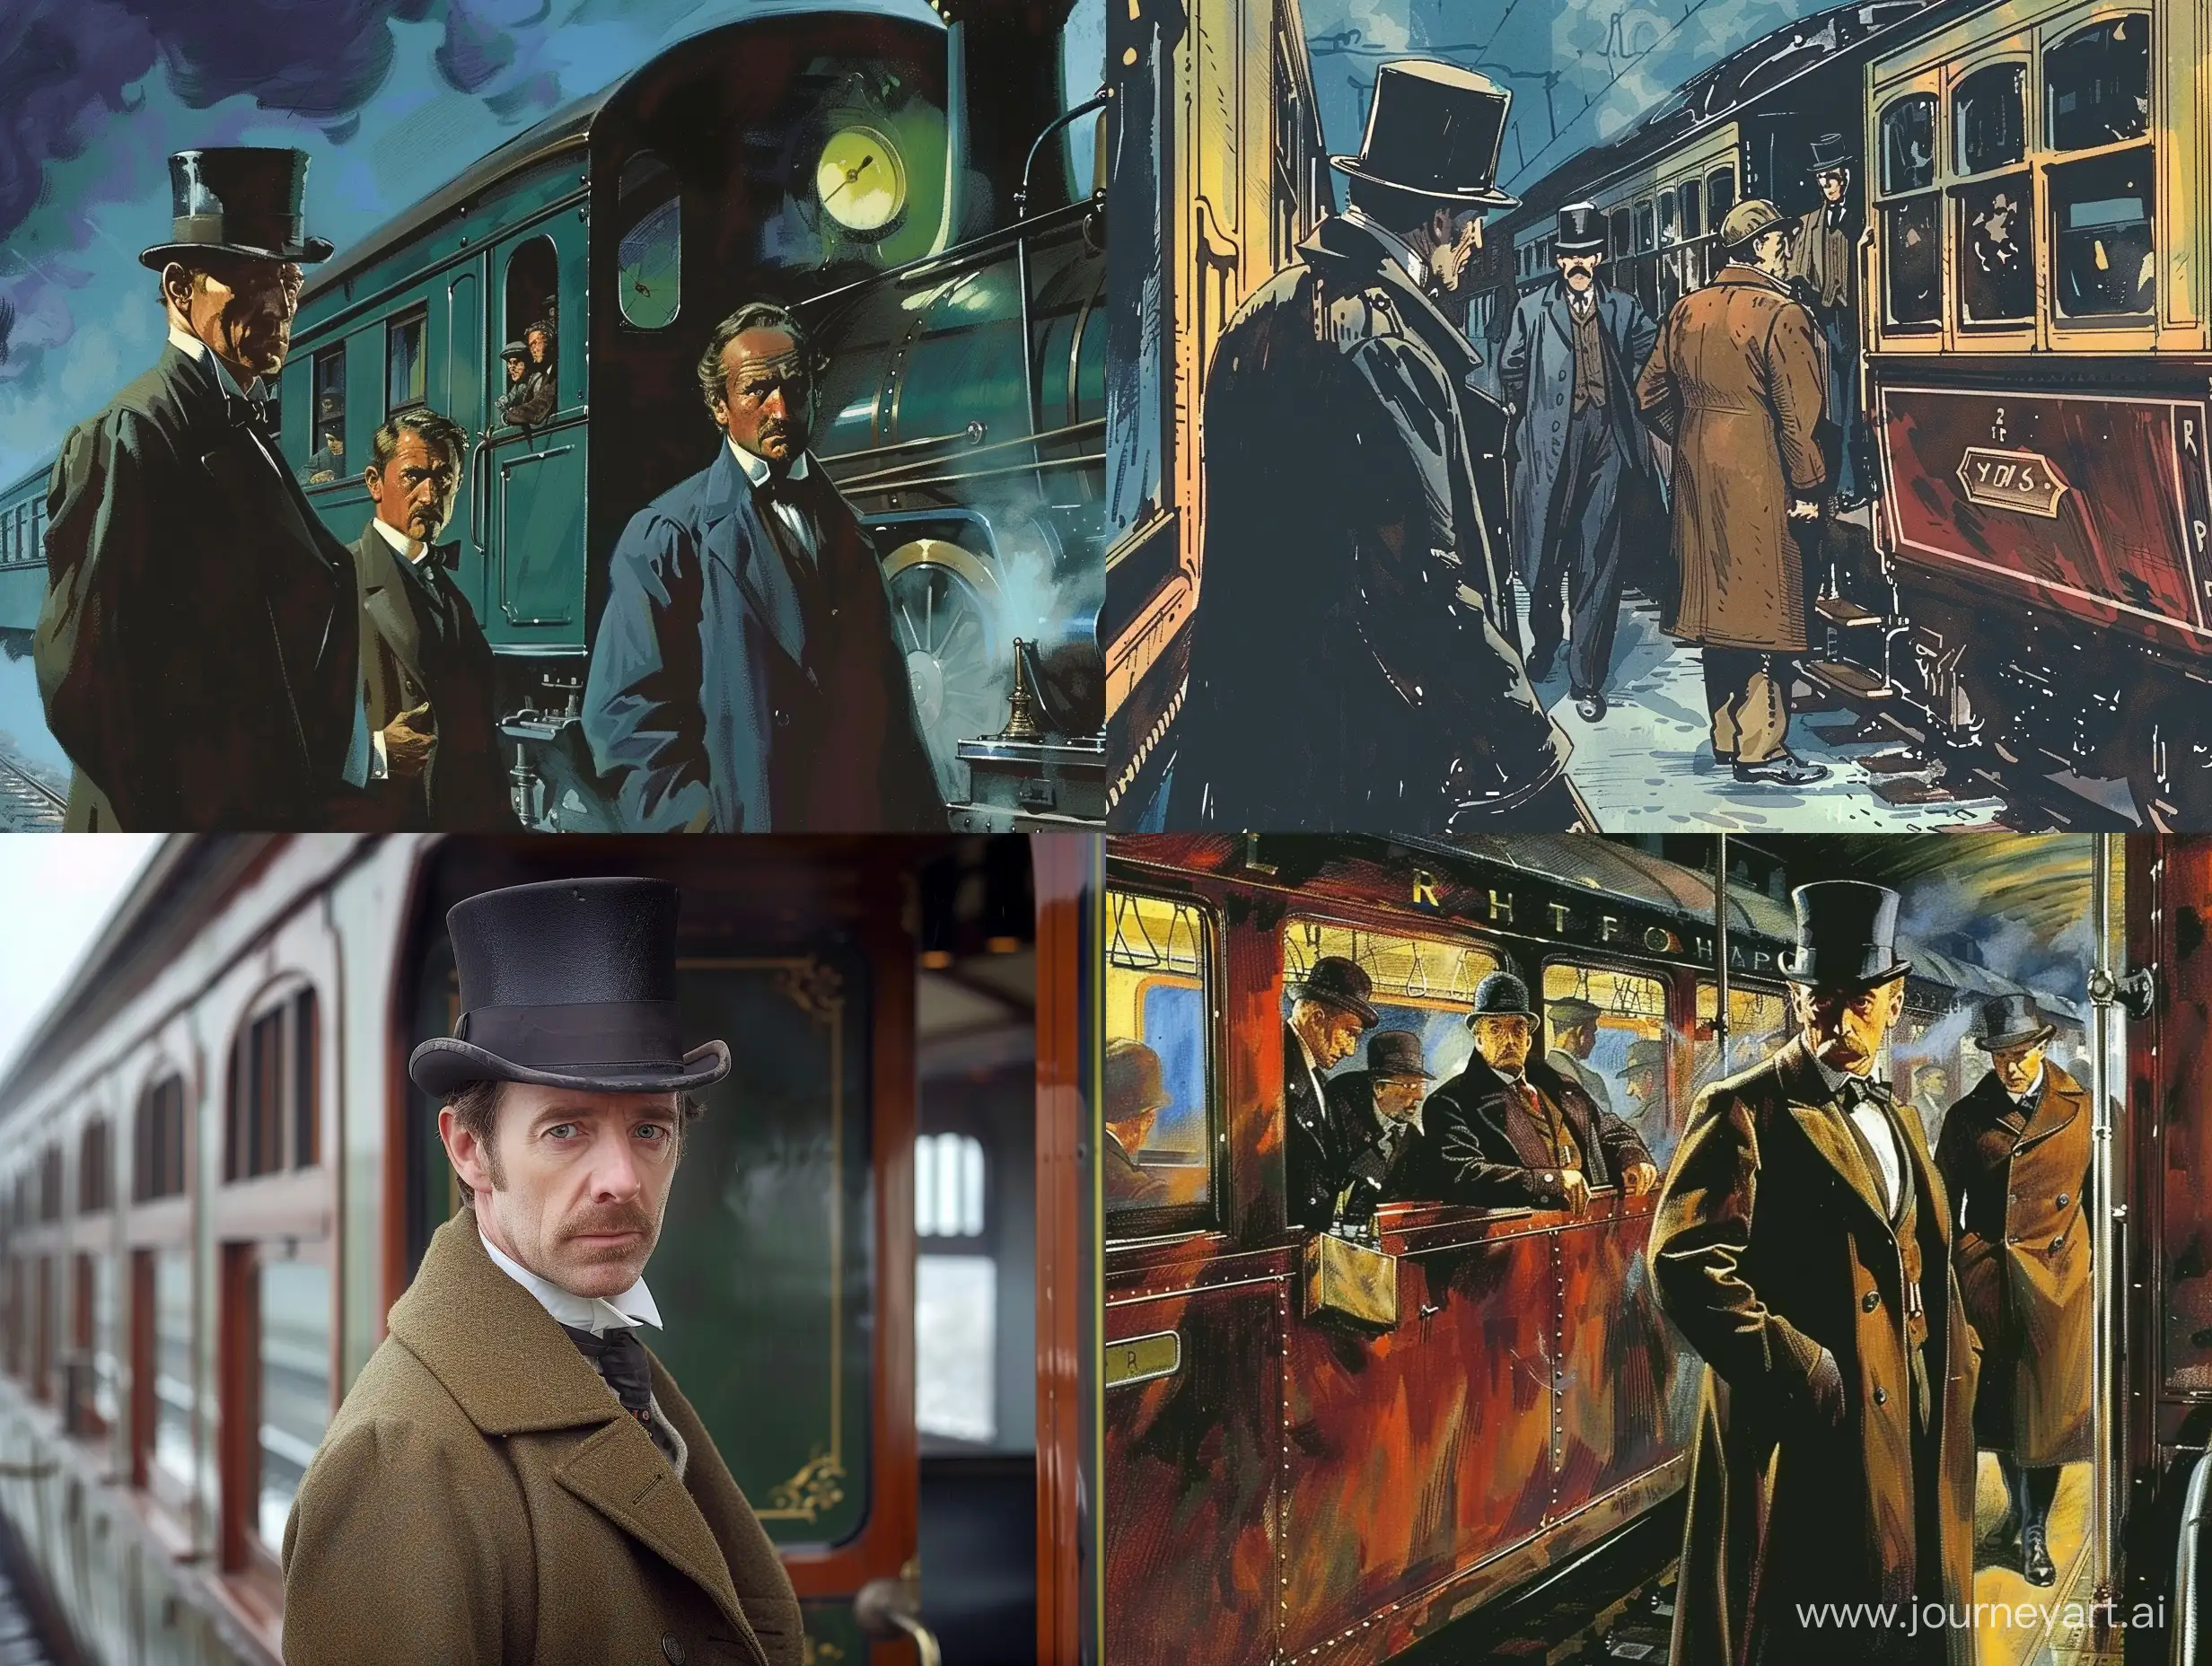 Sherlock Holmes faces a murder on a train